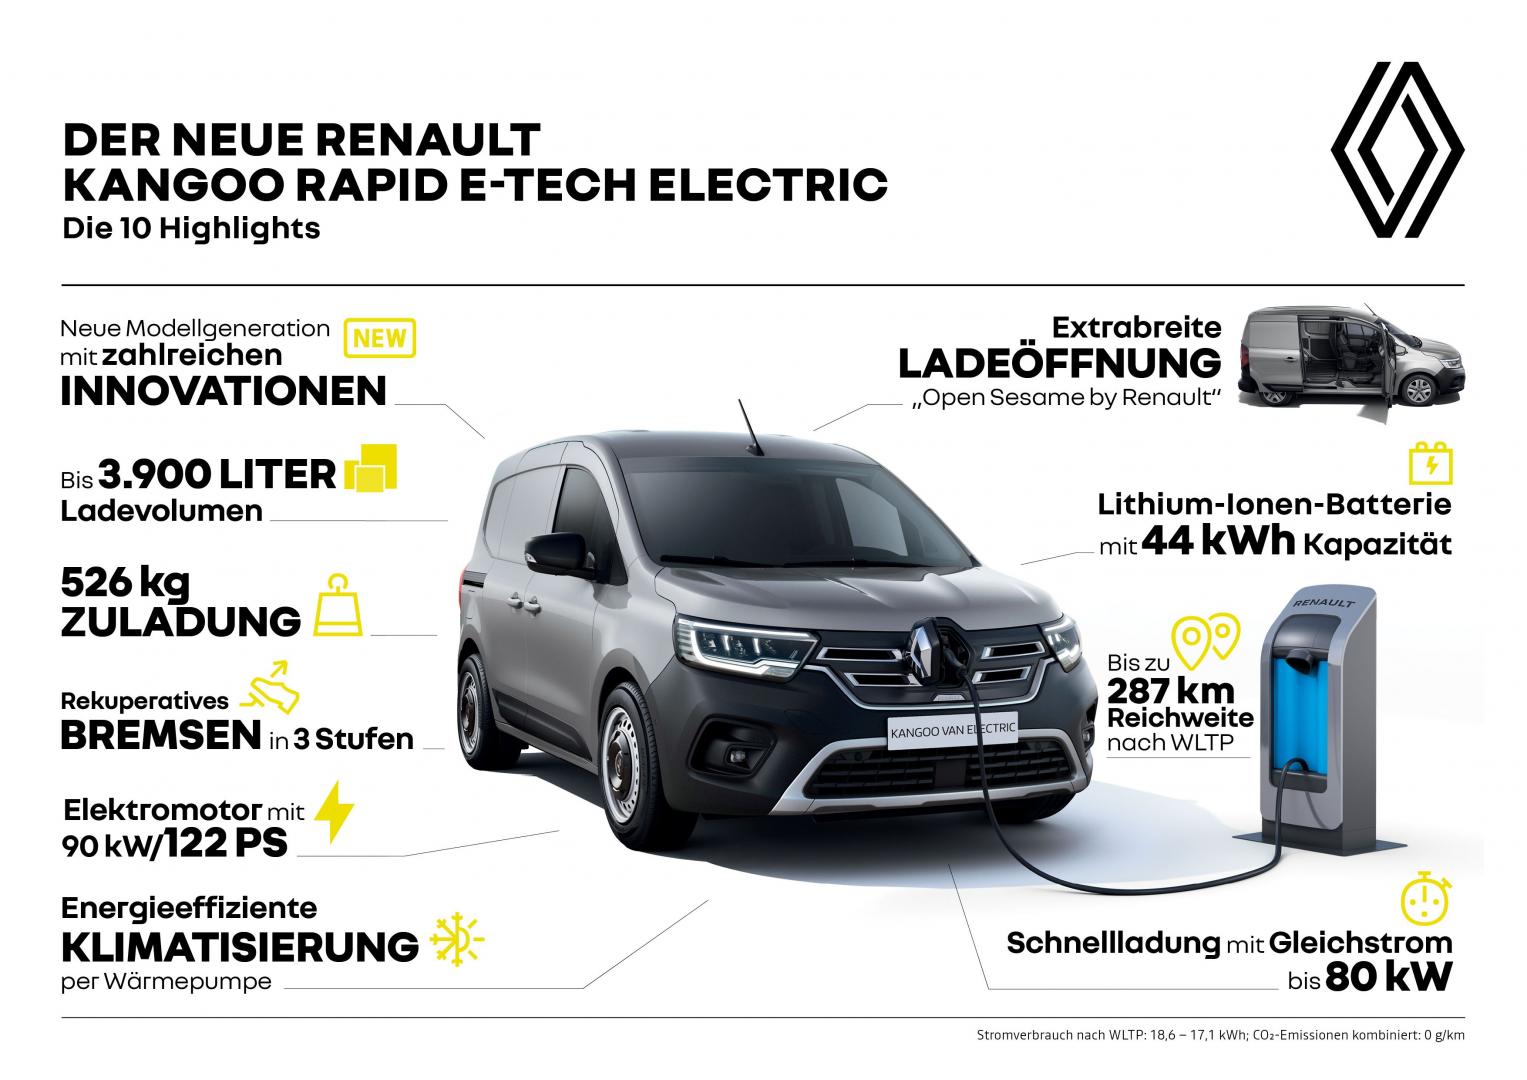 Der neue Renault KANGOO RAPID E-TECH 100% eleketrisch (elektro